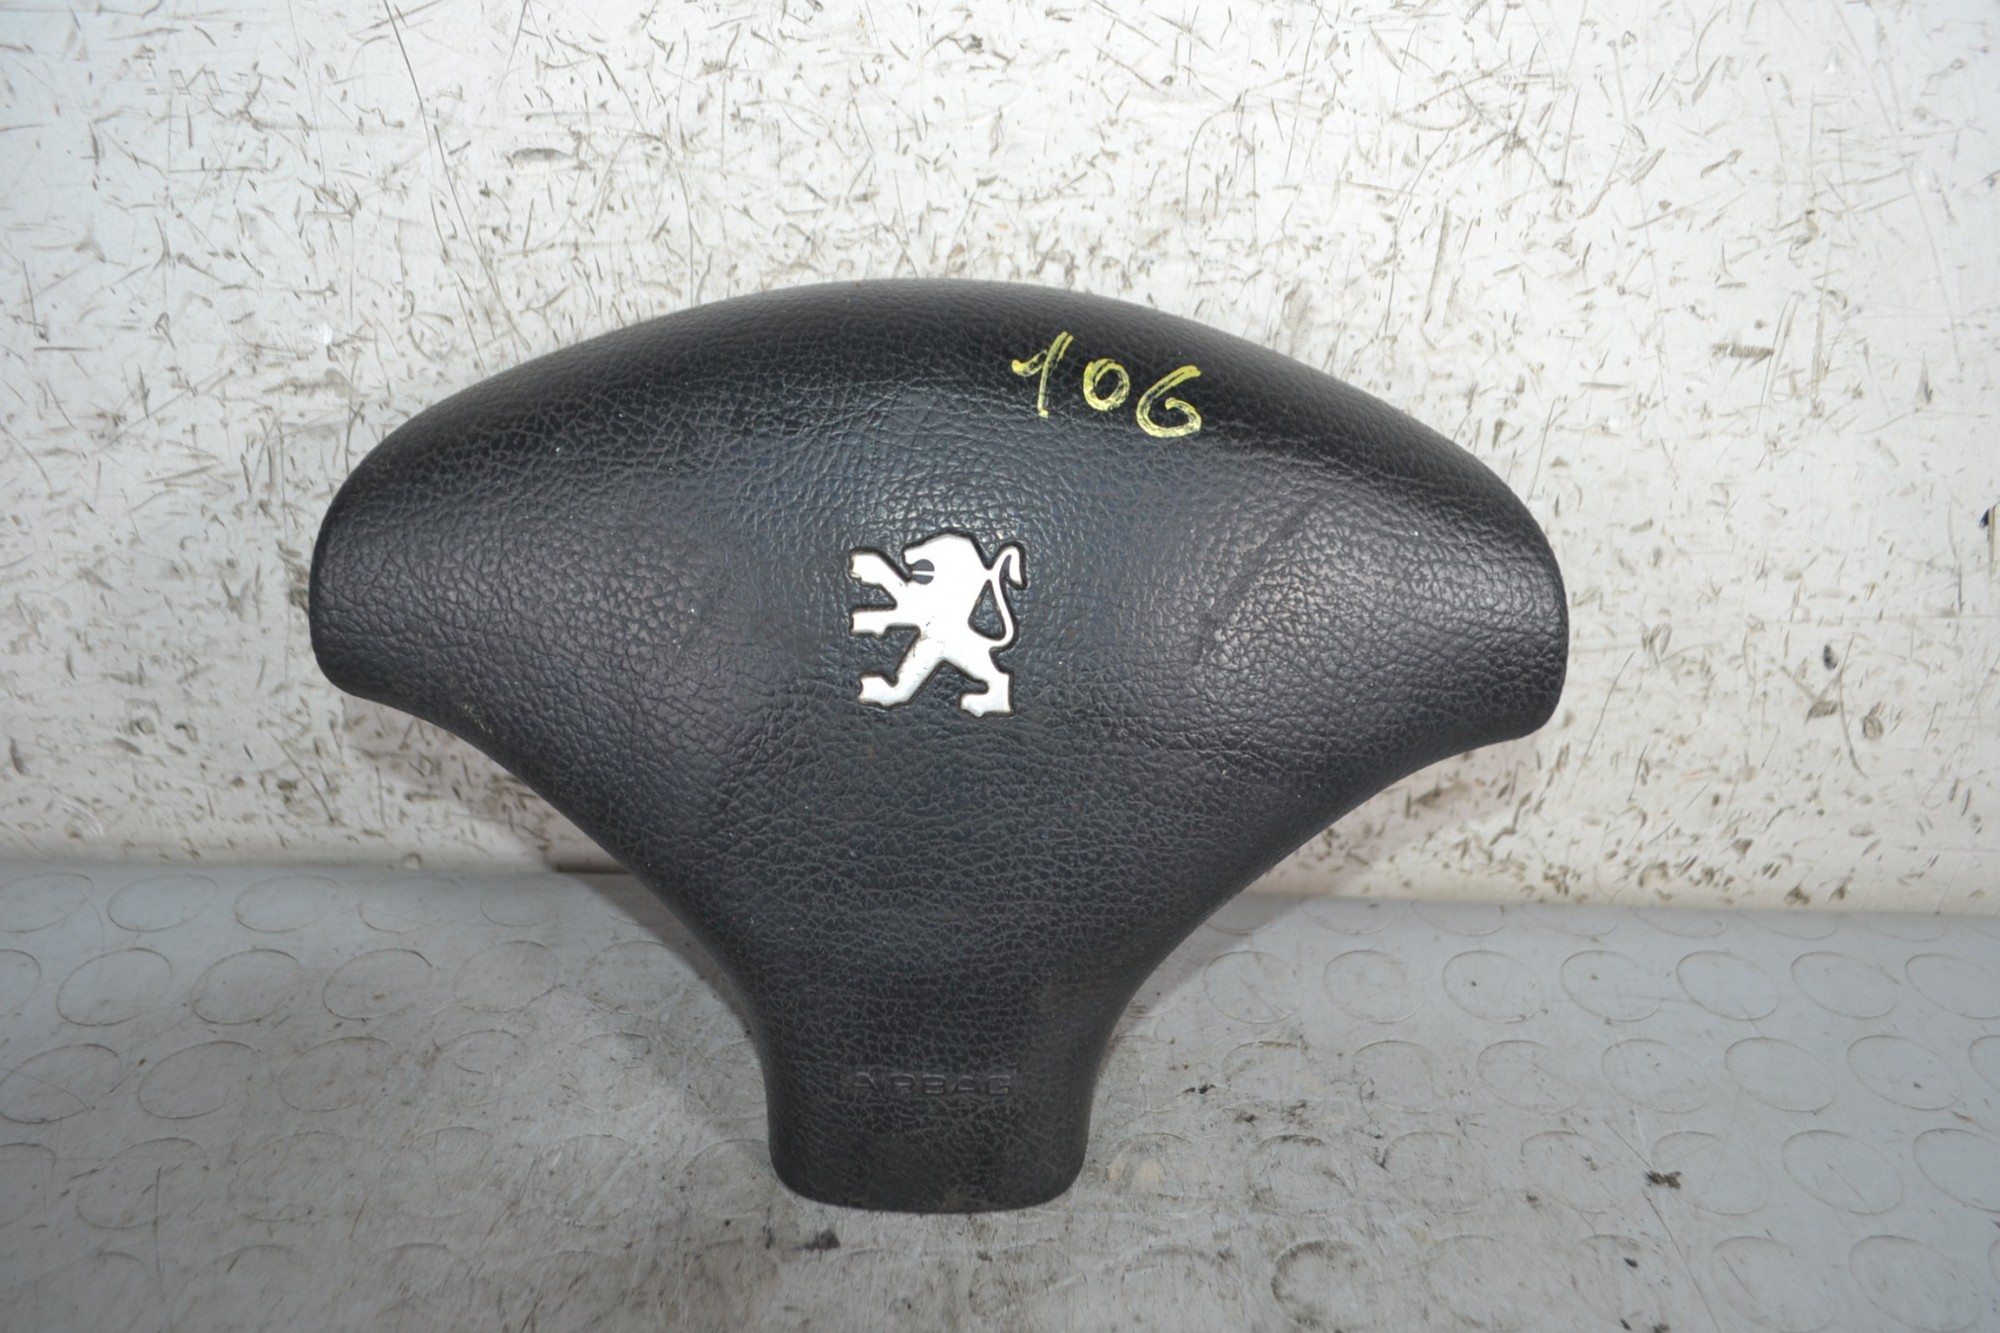 Airbag volante Peugeot 106 Dal 1996 al 2004  1685520813119